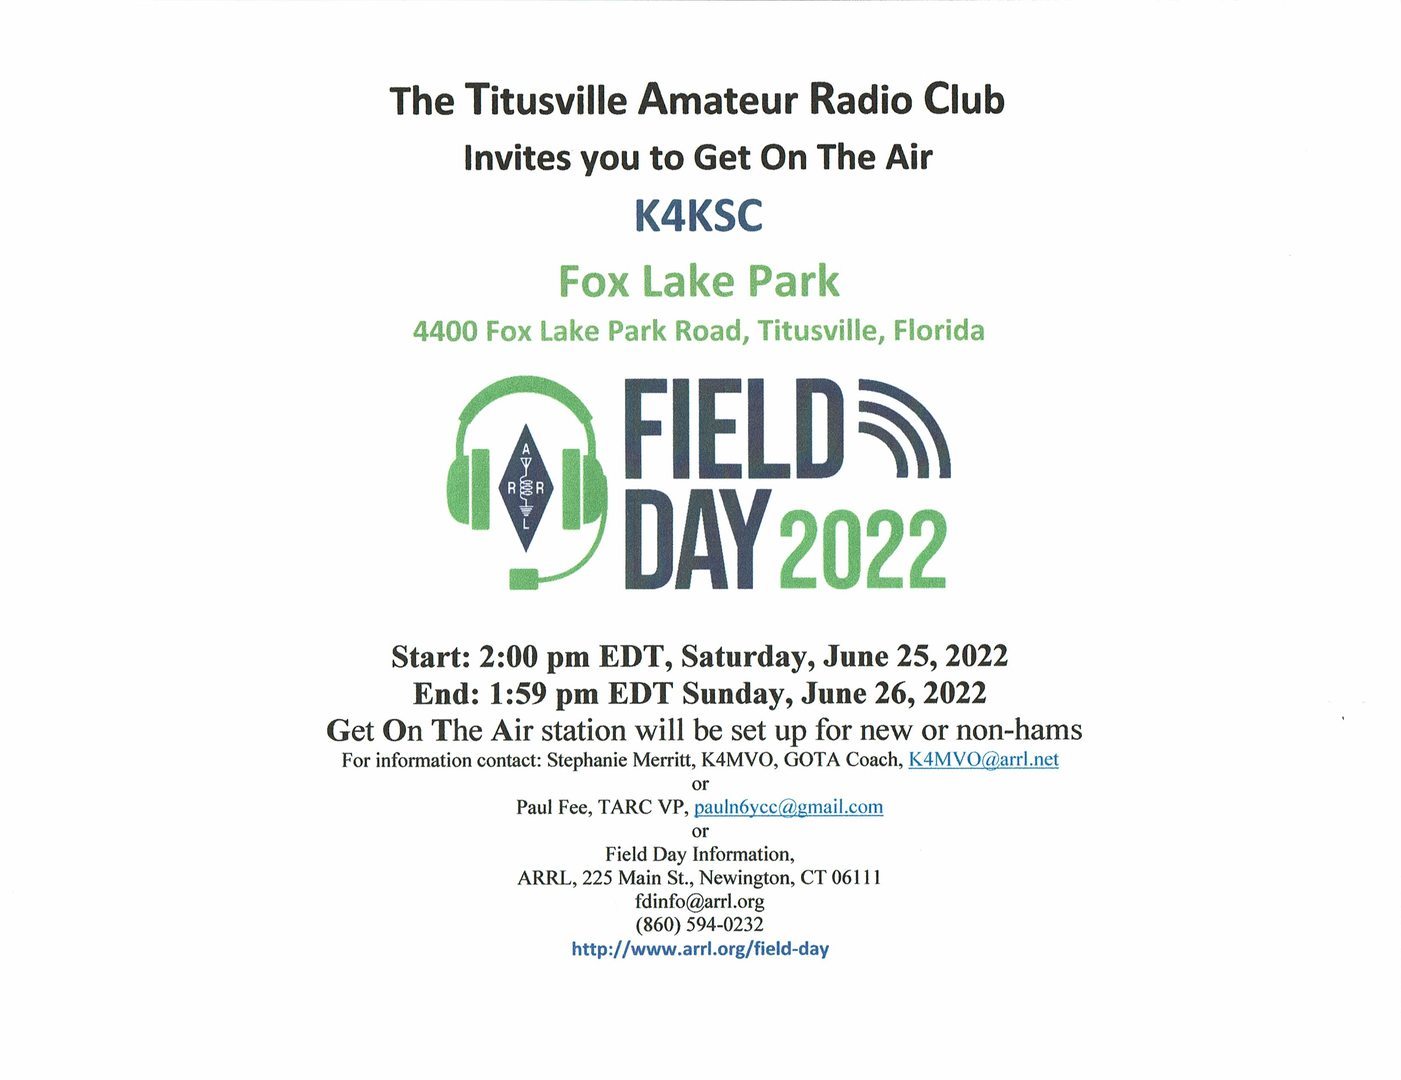 ARRL Field Day with Titusville Amateur Radio Club K4KSC, Titusville, Florida, United States